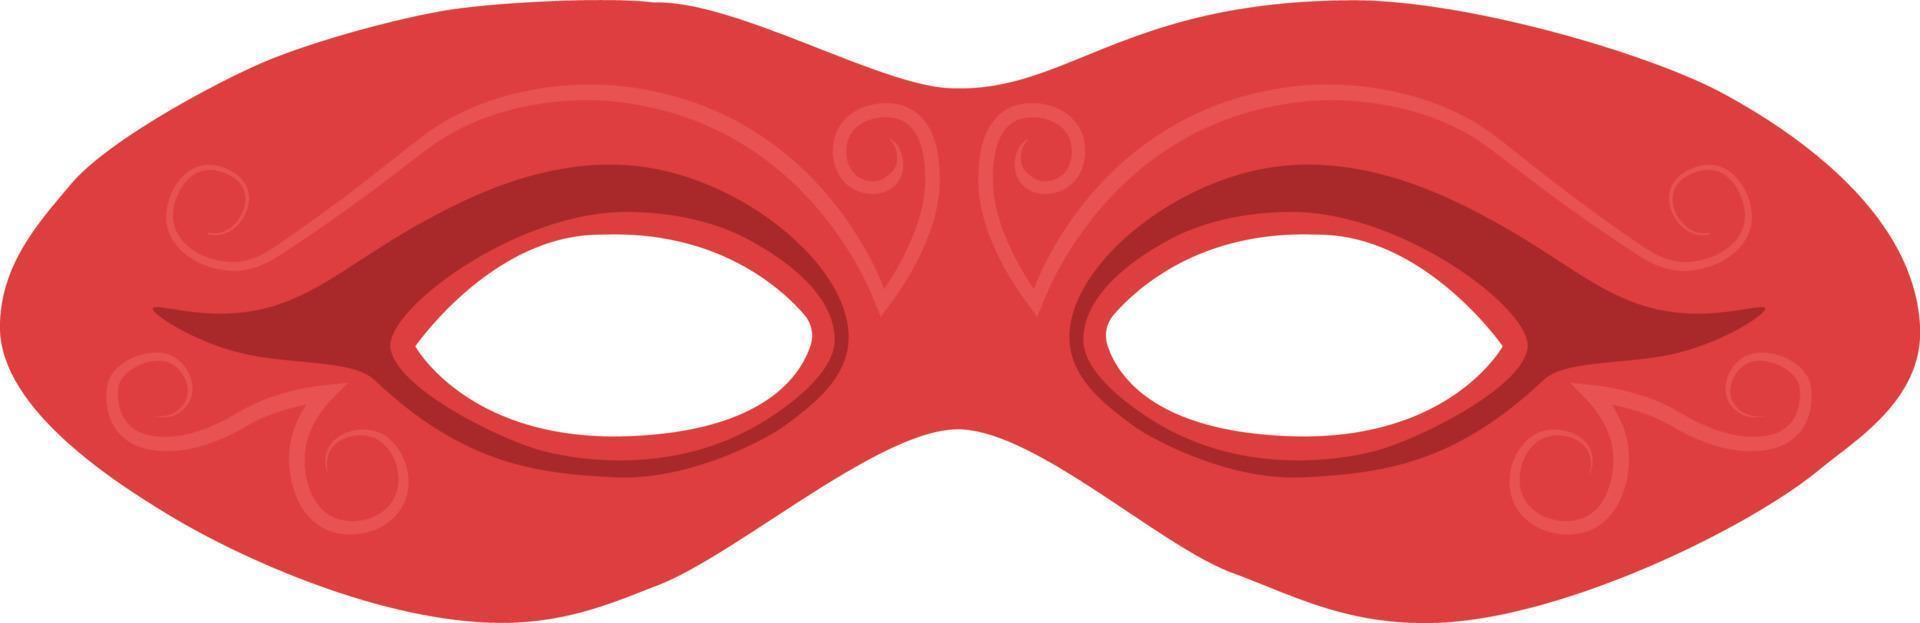 Carnival mask flat design icon vector